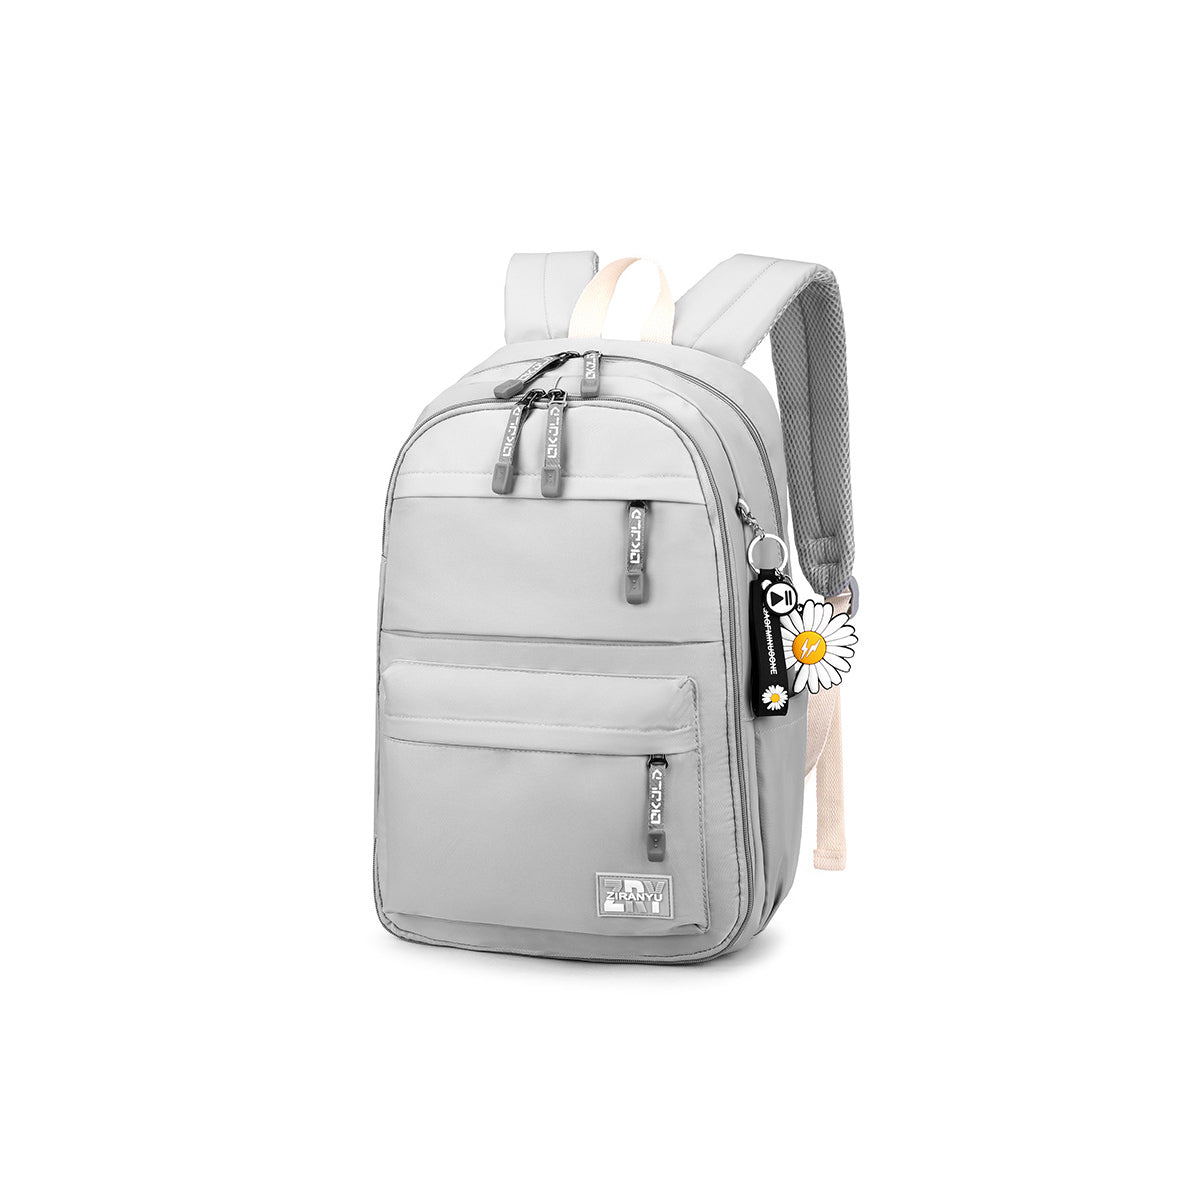 Lightweight Waterproof Wearable School Leisure Travel Backpack